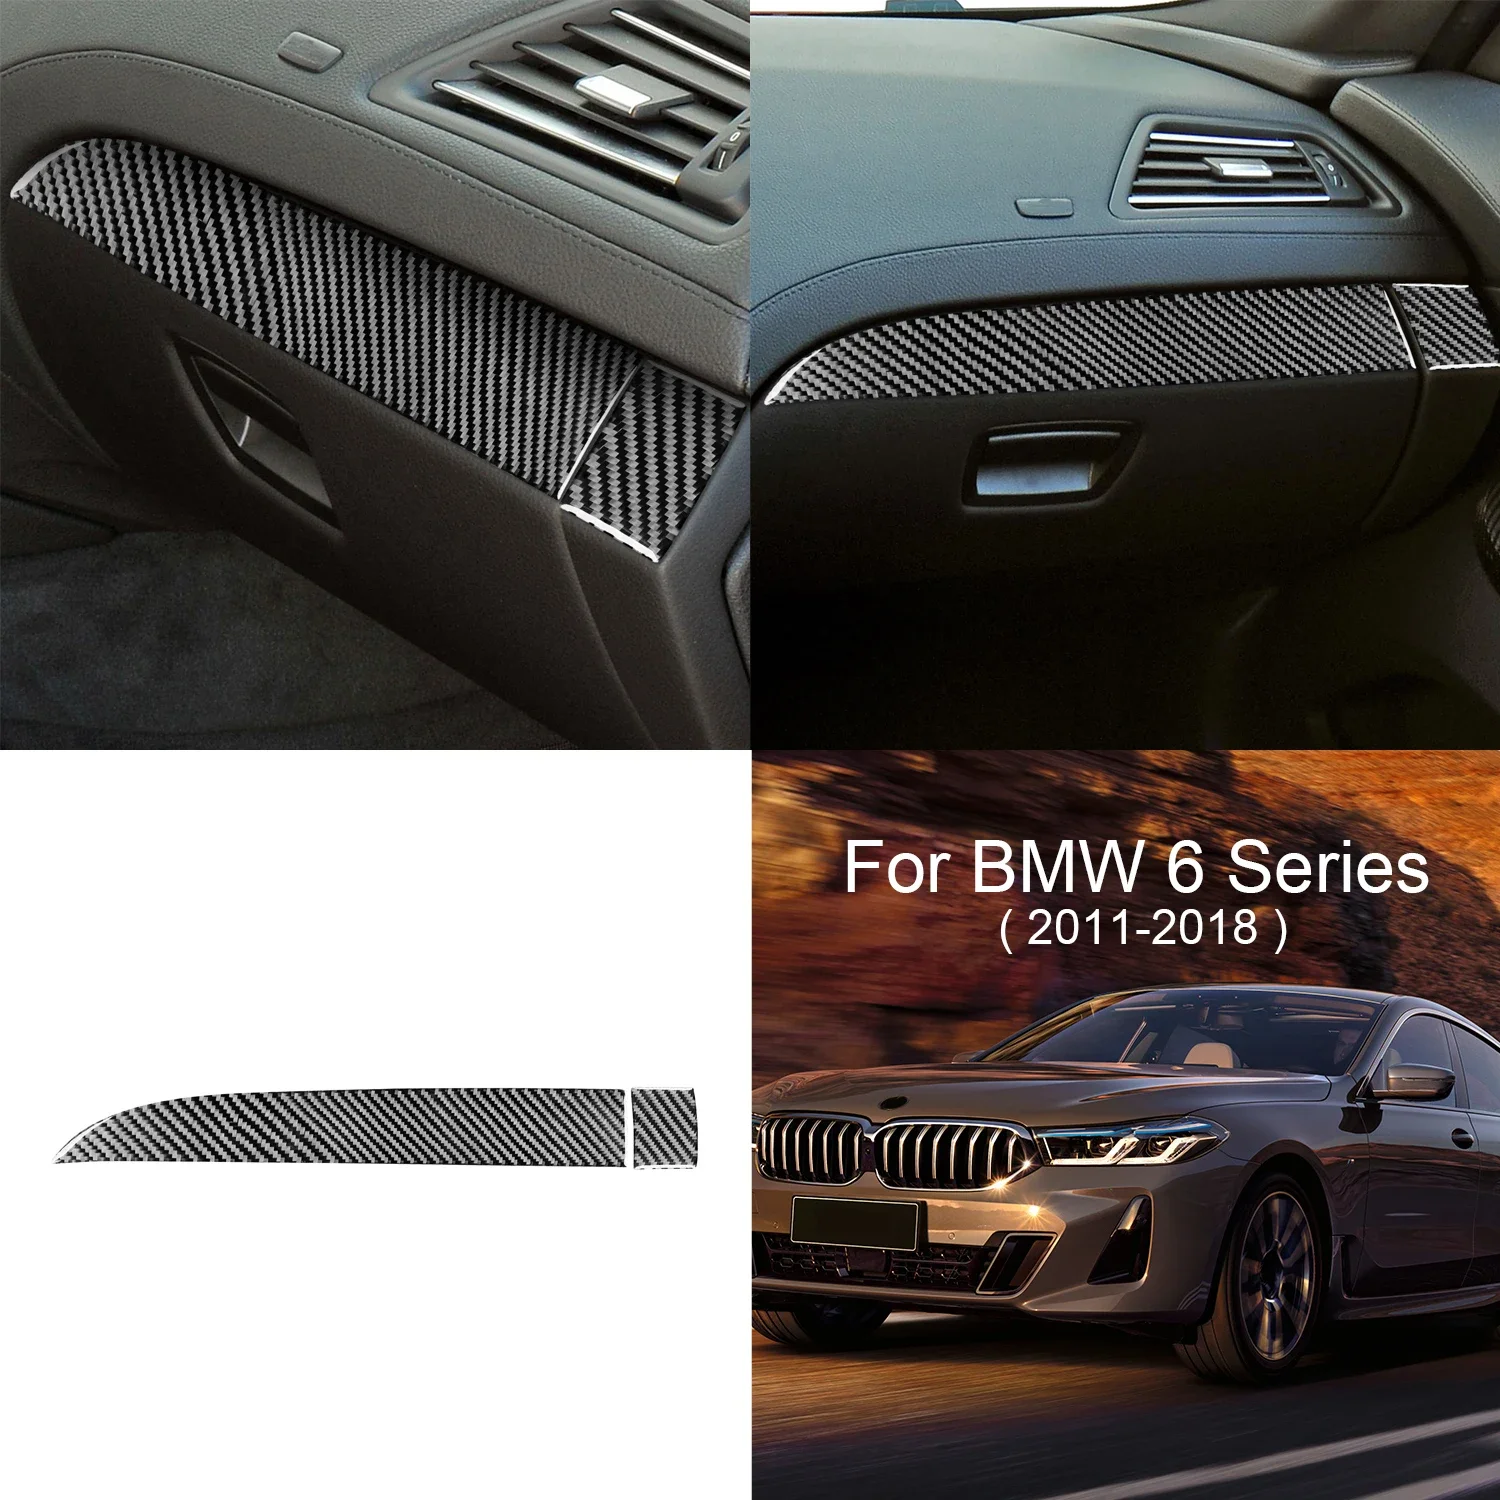 

2Pcs For BMW 6 Series M6 F12 F13 F06 2011-2018 M Sport Carbon Fiber Stickers Co-Pilot Instrument Panel Car Styling Accessories